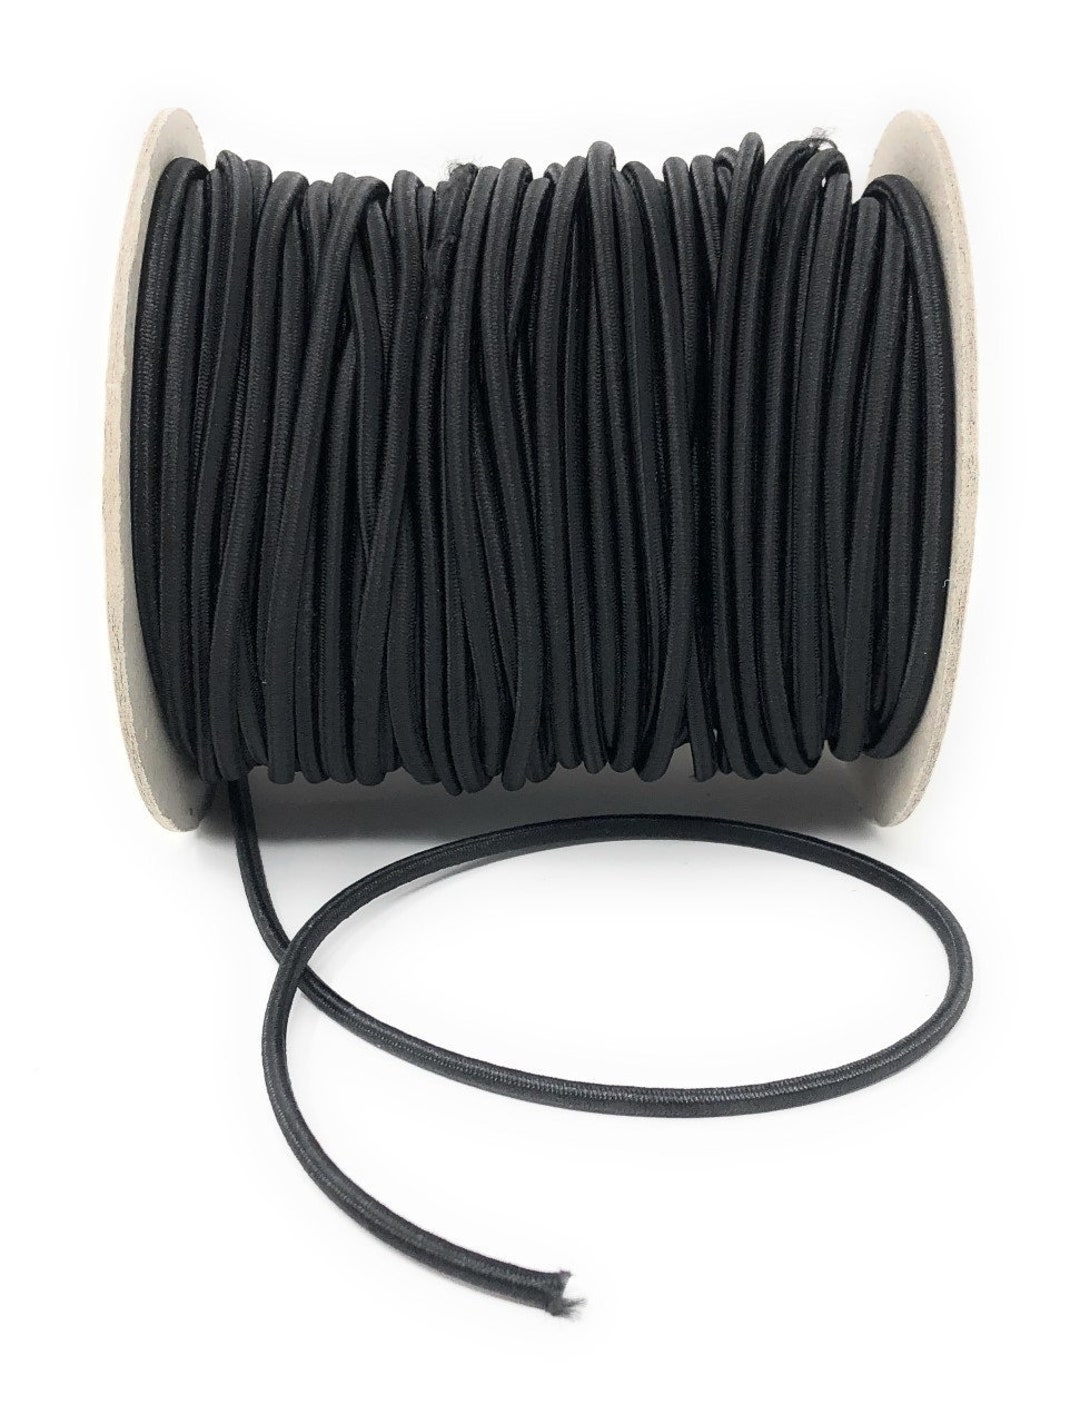 Elastic Rope / Elastic Thread 3mm Black Sold by 5 Meters / Elastic Cord /  Couture Haberdashery 